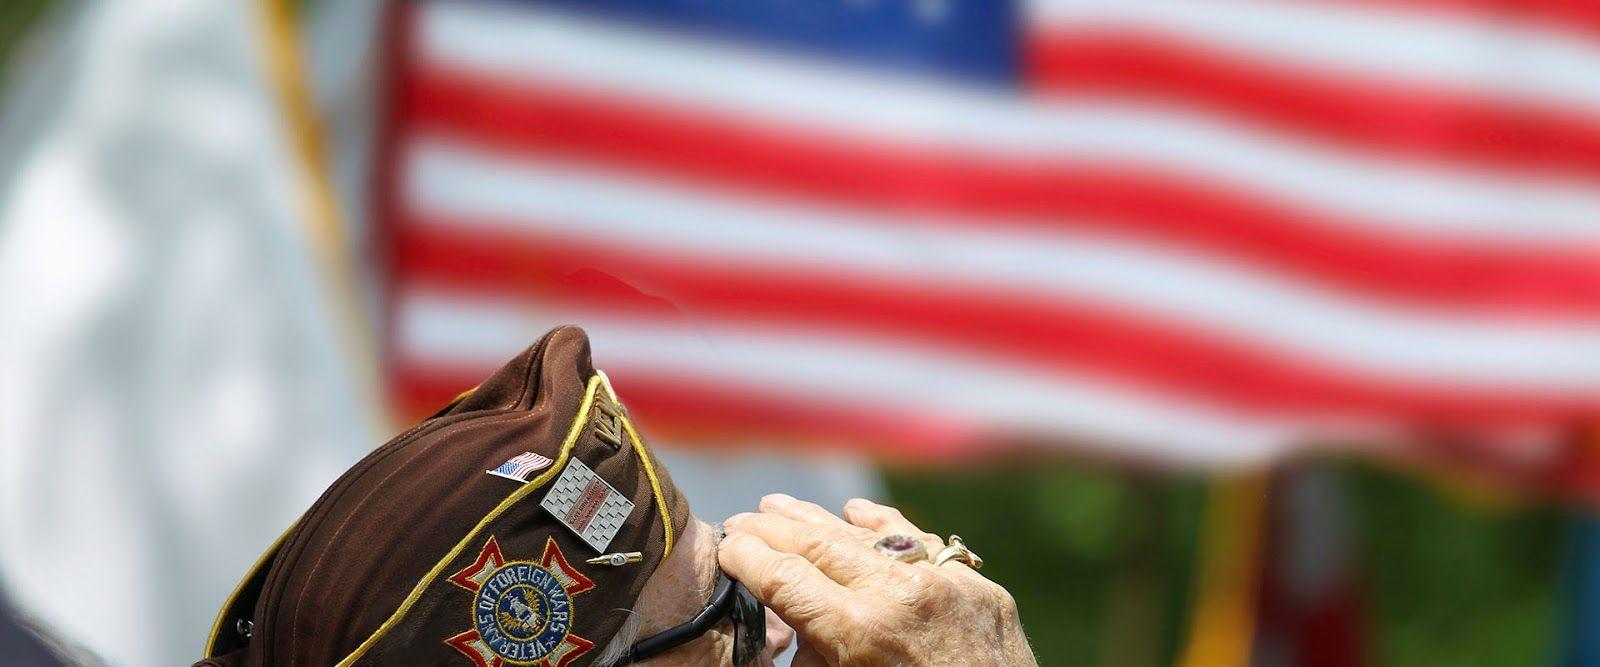 Happy Veterans Day 2017 Image Photo Picture HD Wallpaper Pics